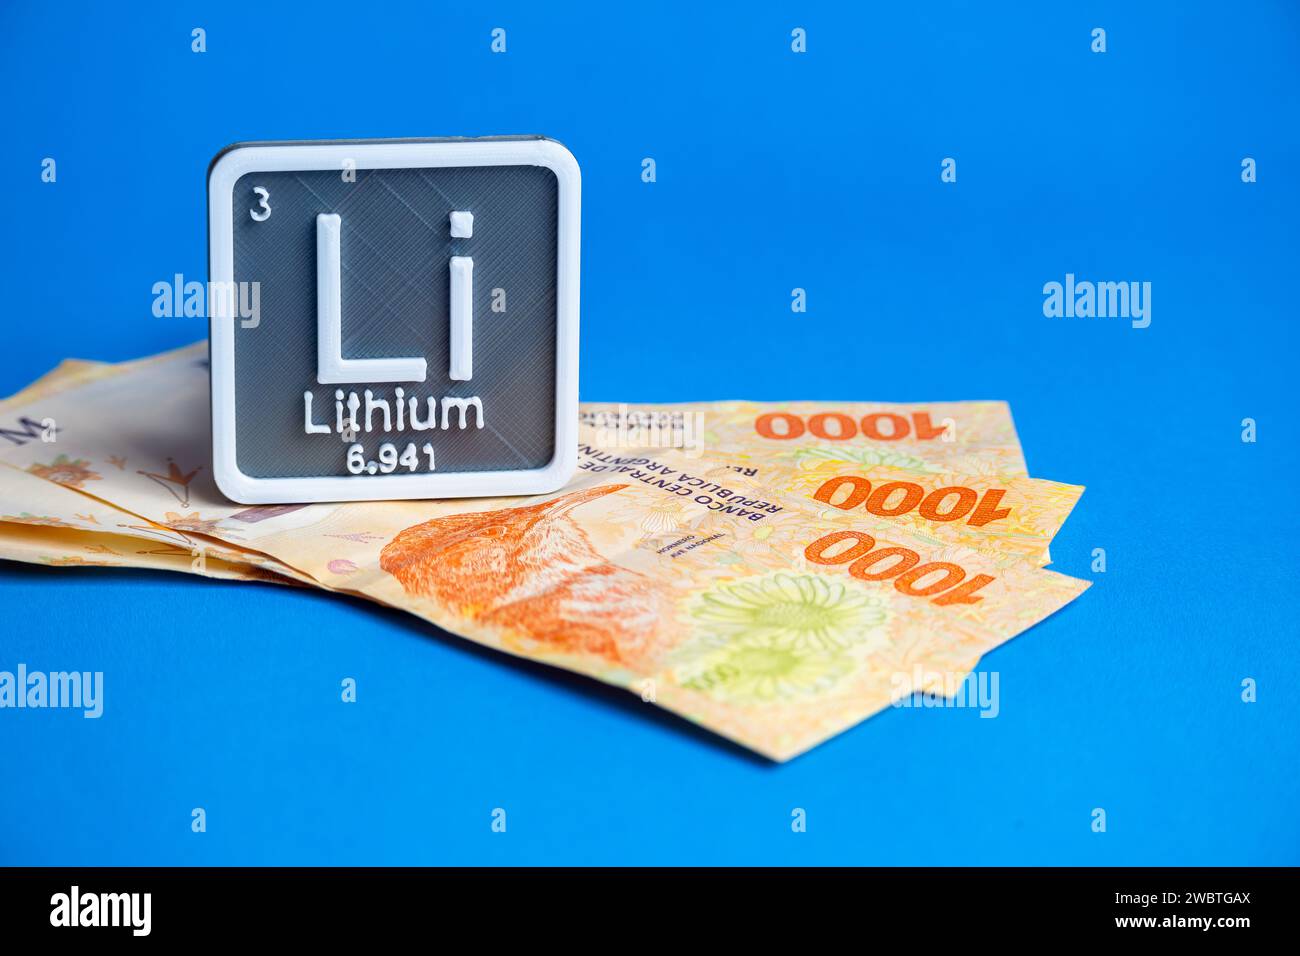 Thousand Argentine peso bills with lithium symbol logo. Stock Photo